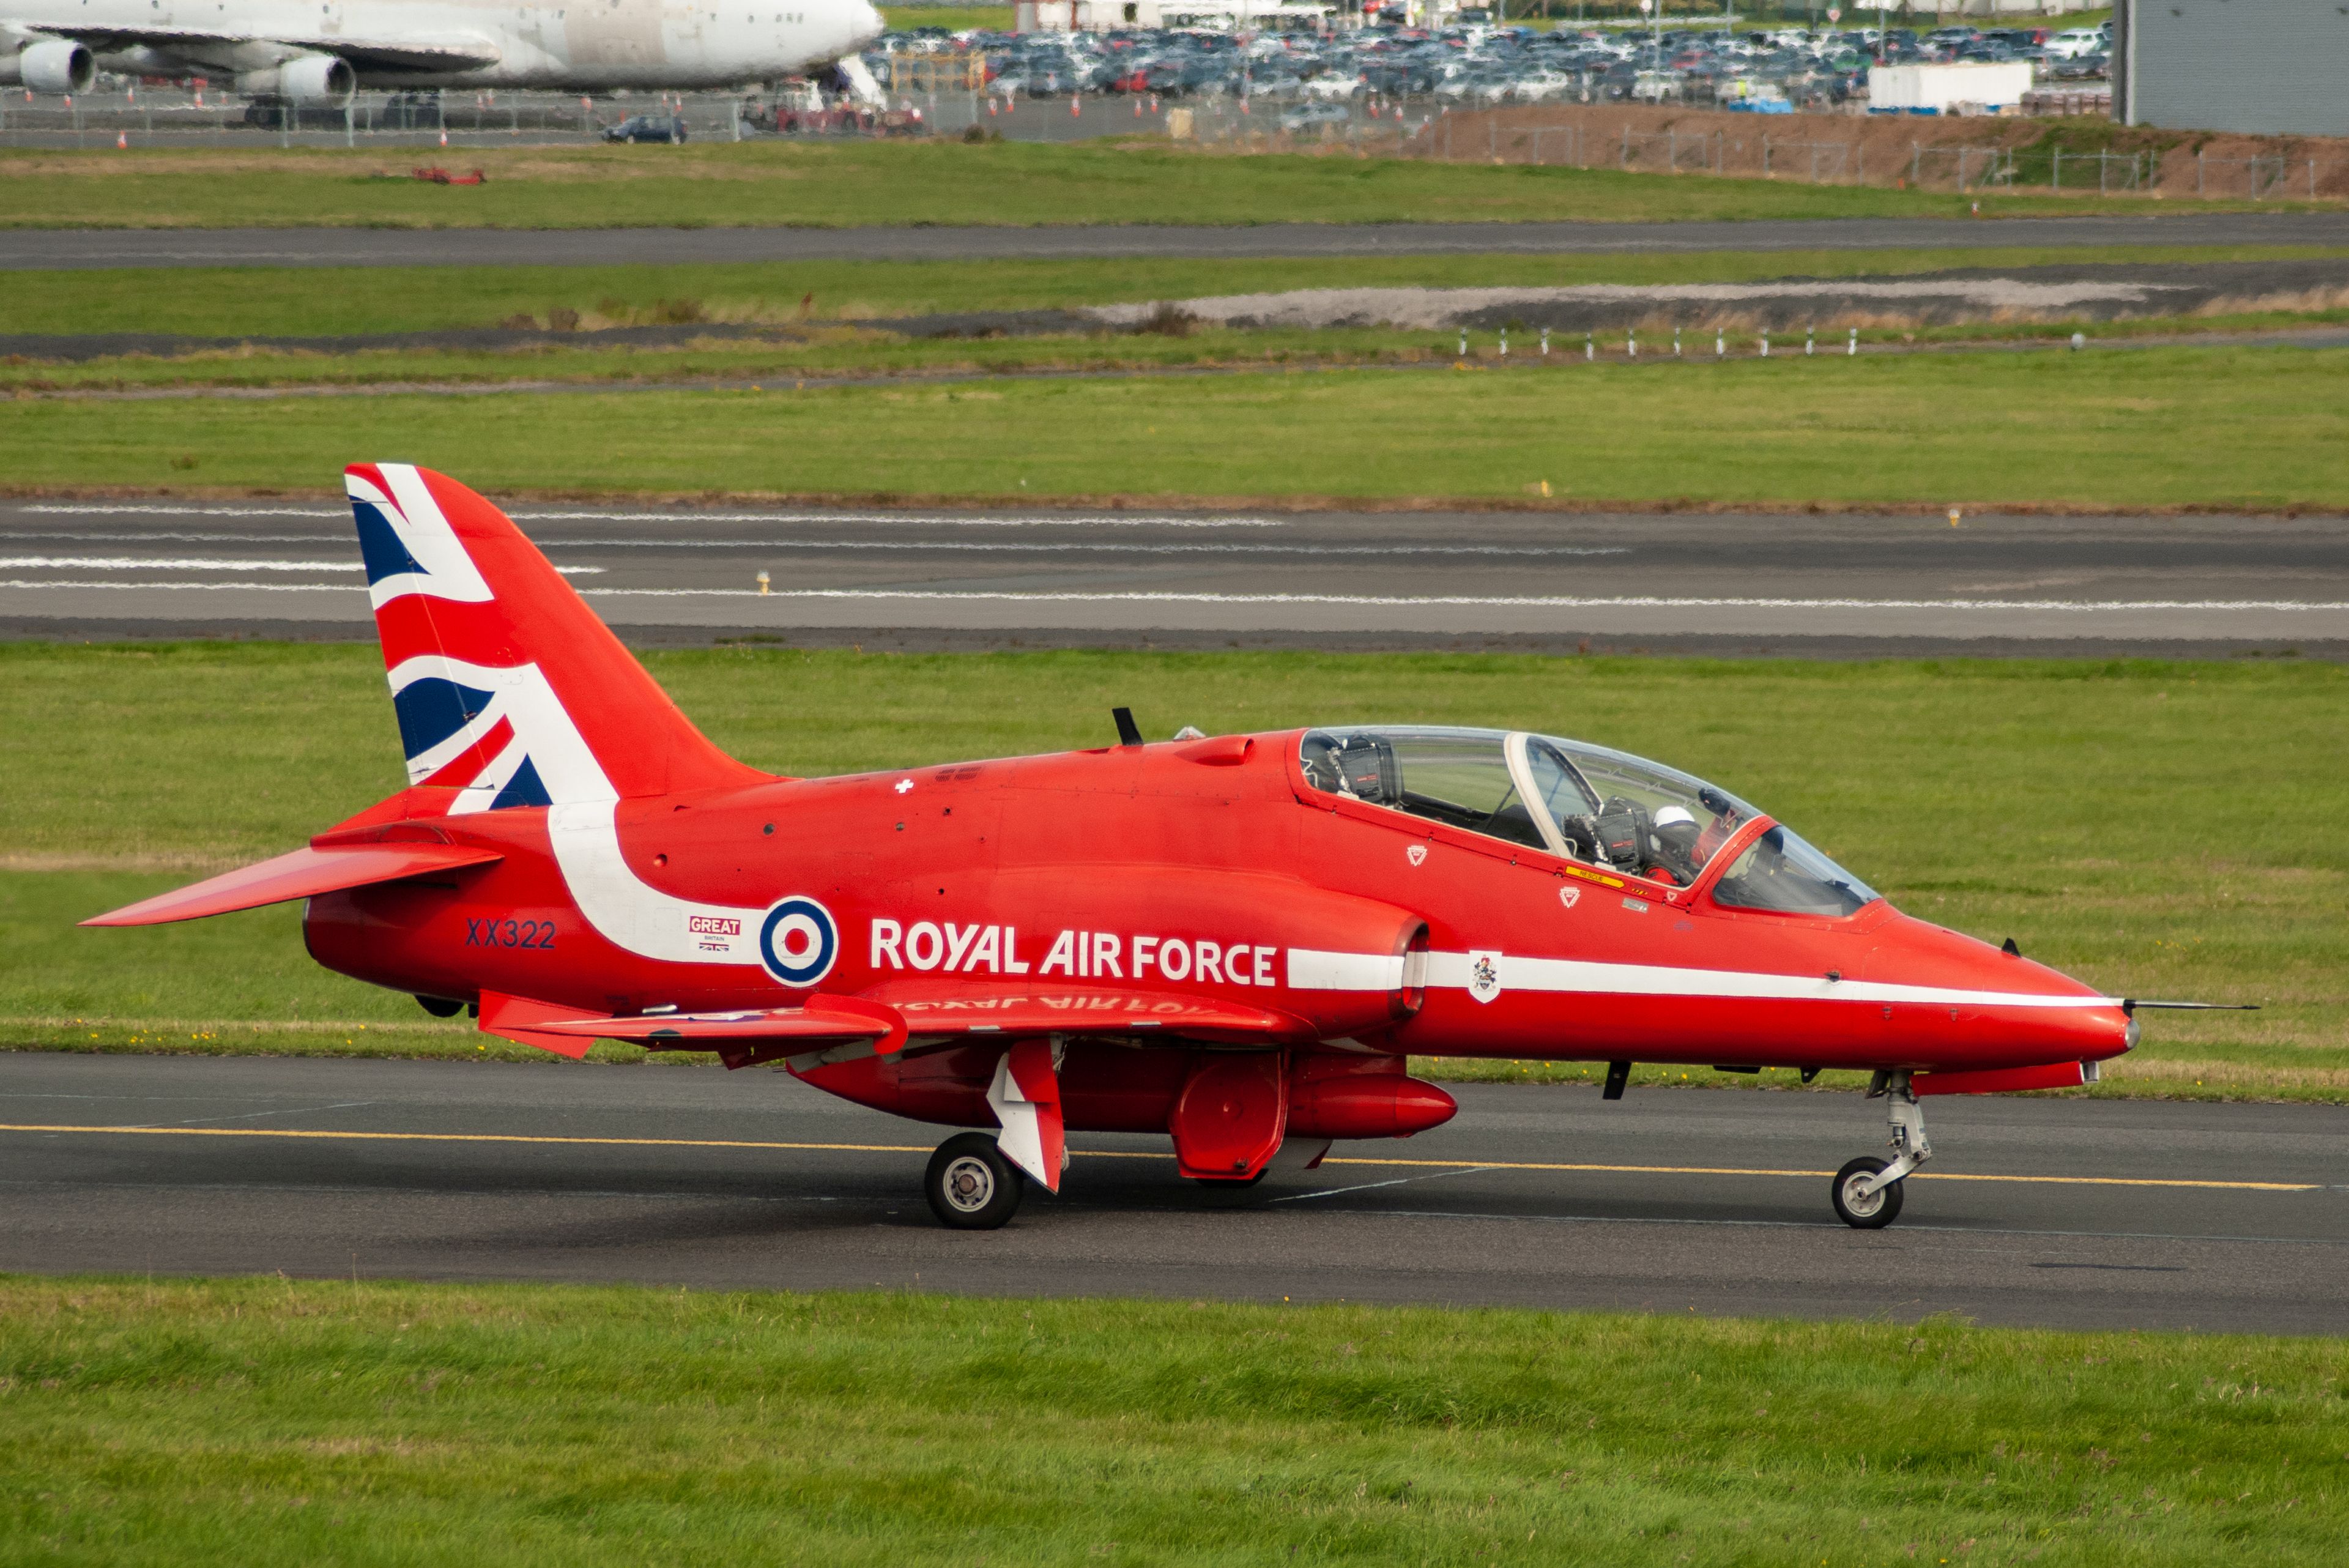 XX322/XX322 RAF - Royal Air Force British Aerospace Hawk Airframe Information - AVSpotters.com